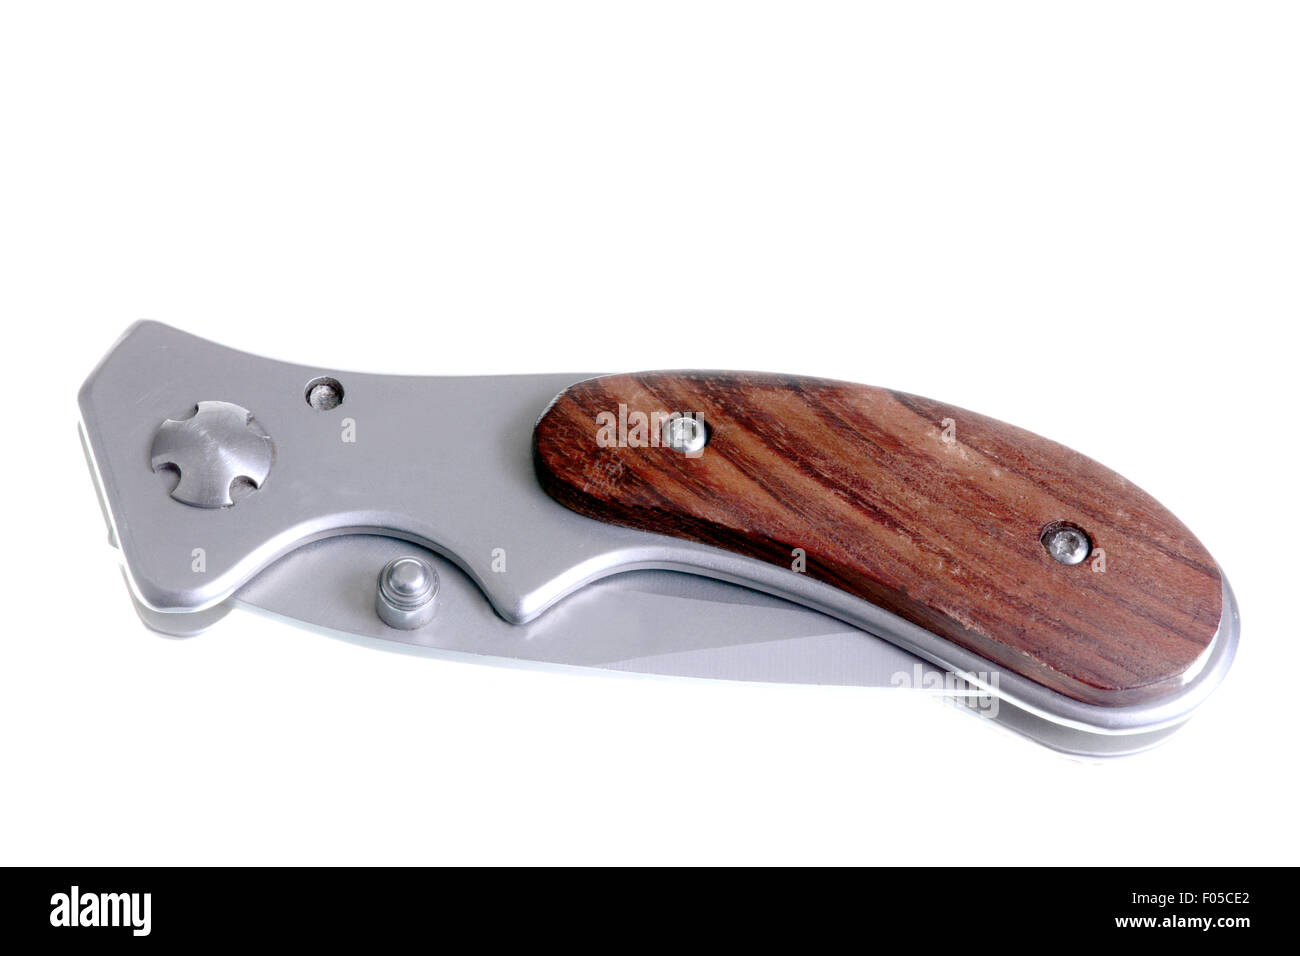 Pocket knife with wood handle isolated on white Stock Photo